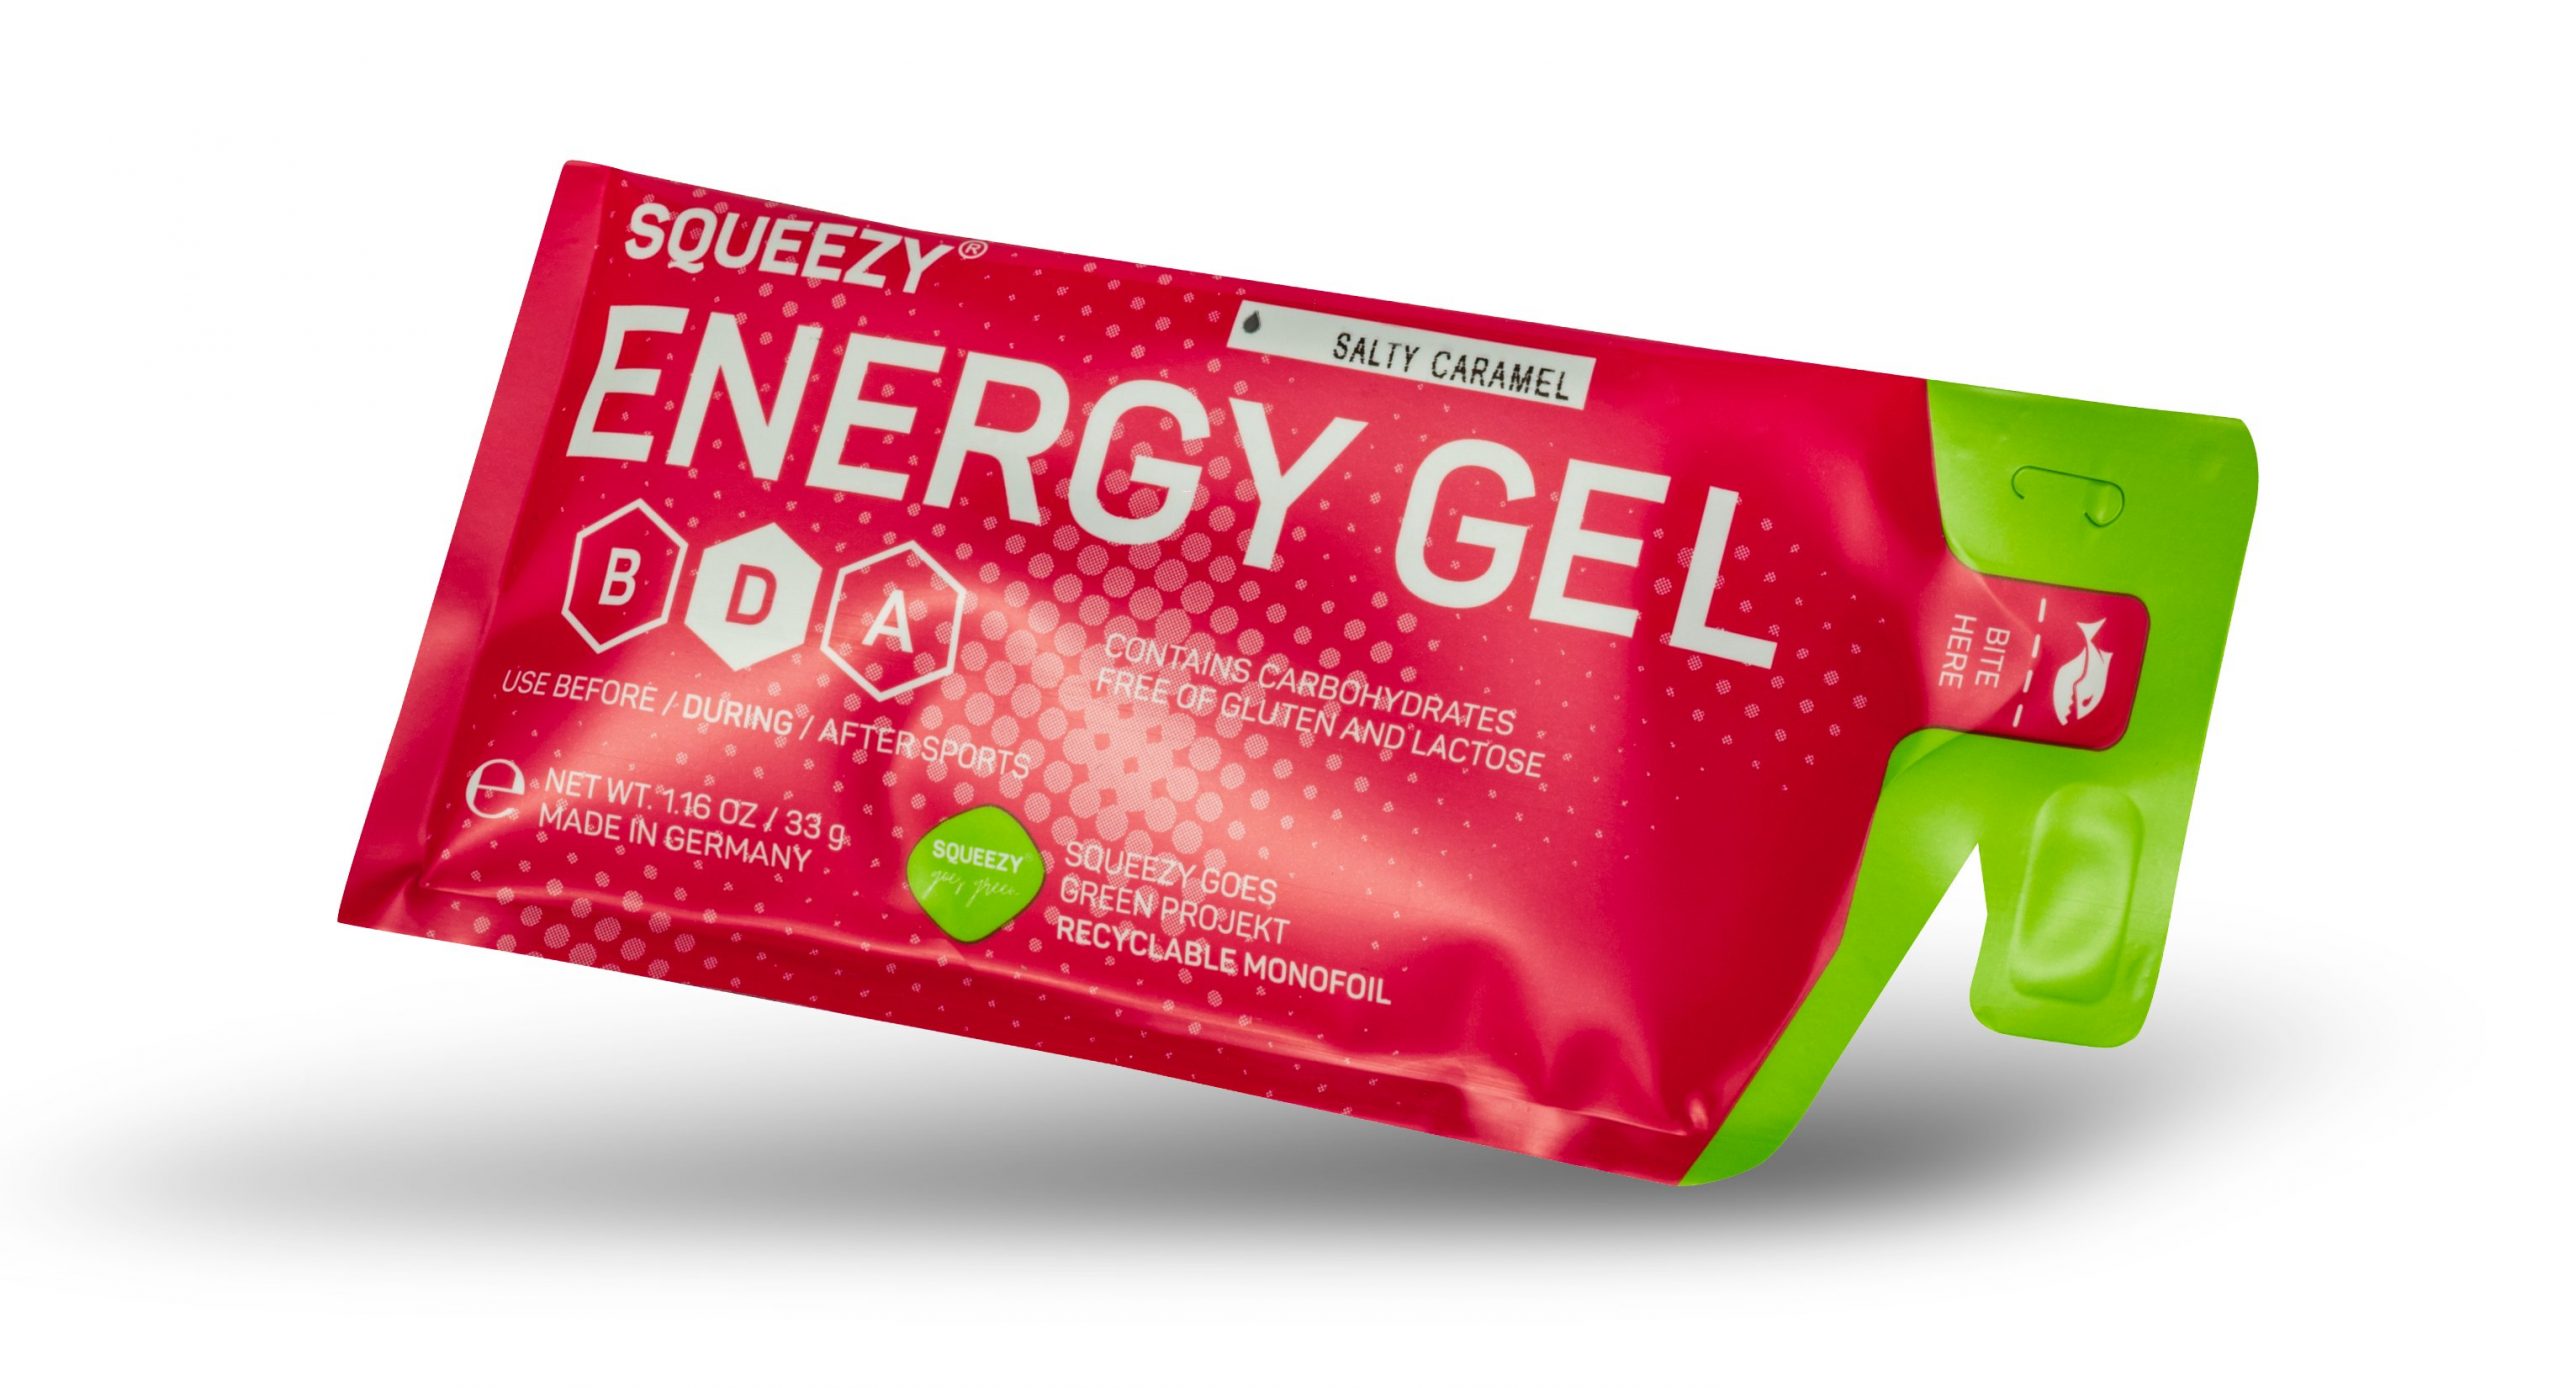 Squeezy Energy Gel in der neuen, recyclingfähigen Monofolie.